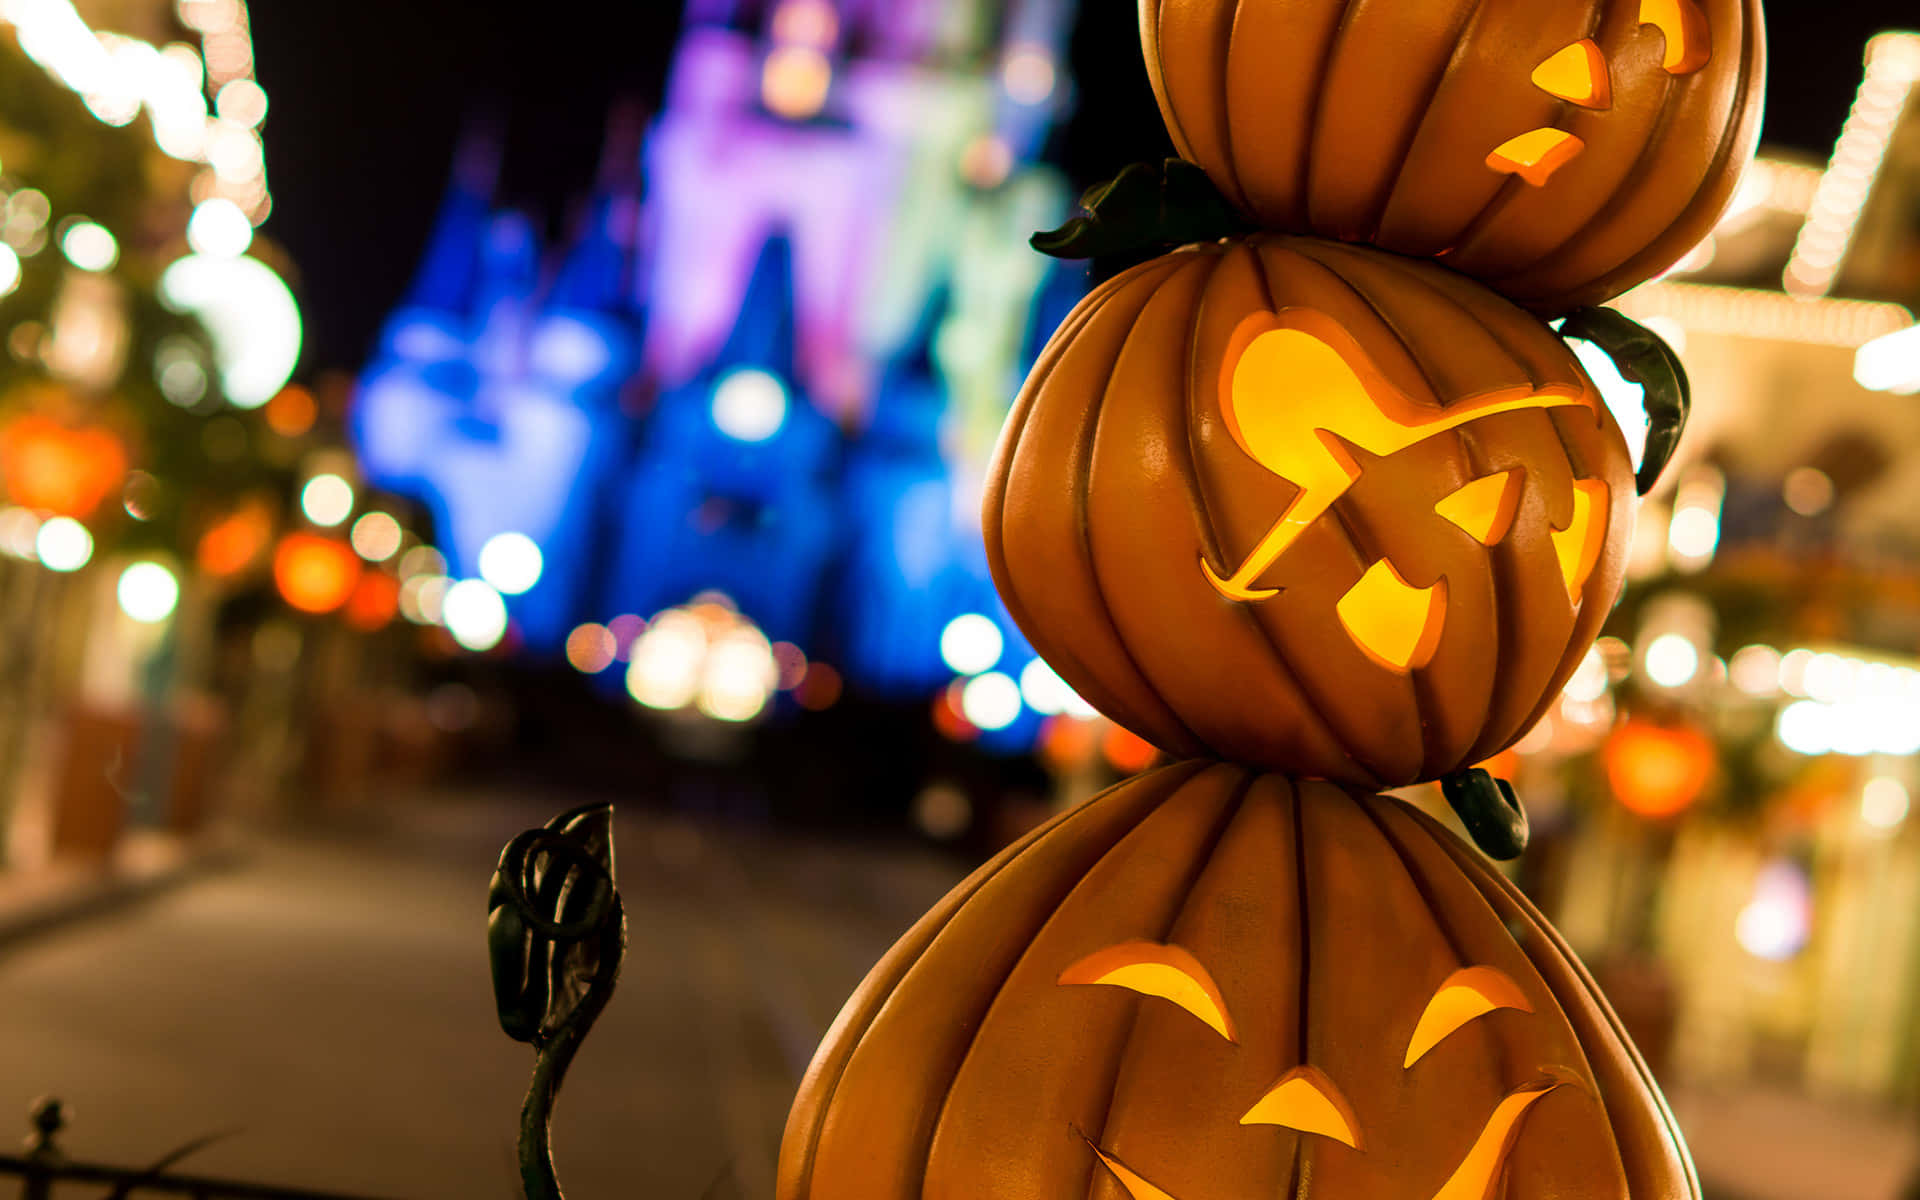 Magical Disney Halloween Night